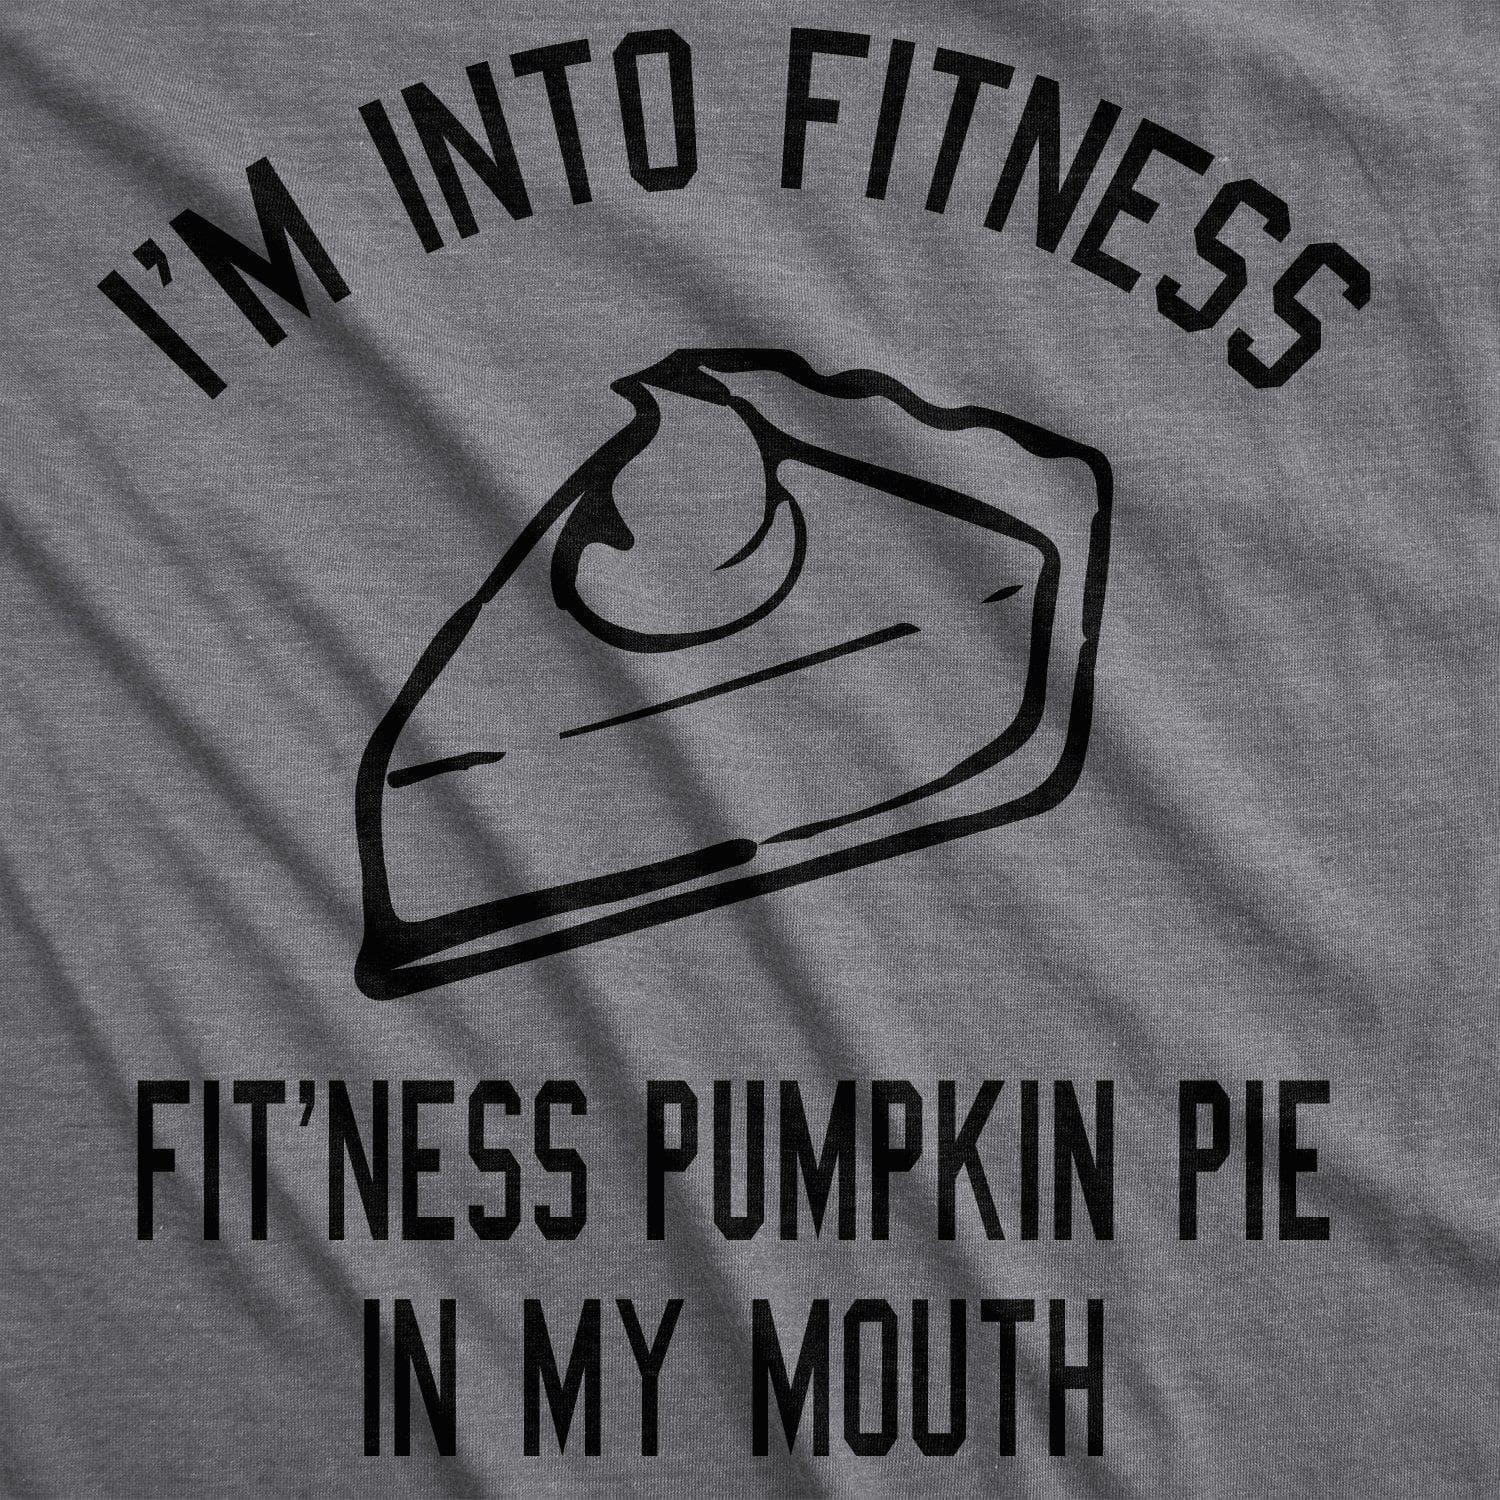 Fitness Pumpkin Pie In My Mouth Women's Tshirt - Crazy Dog T-Shirts